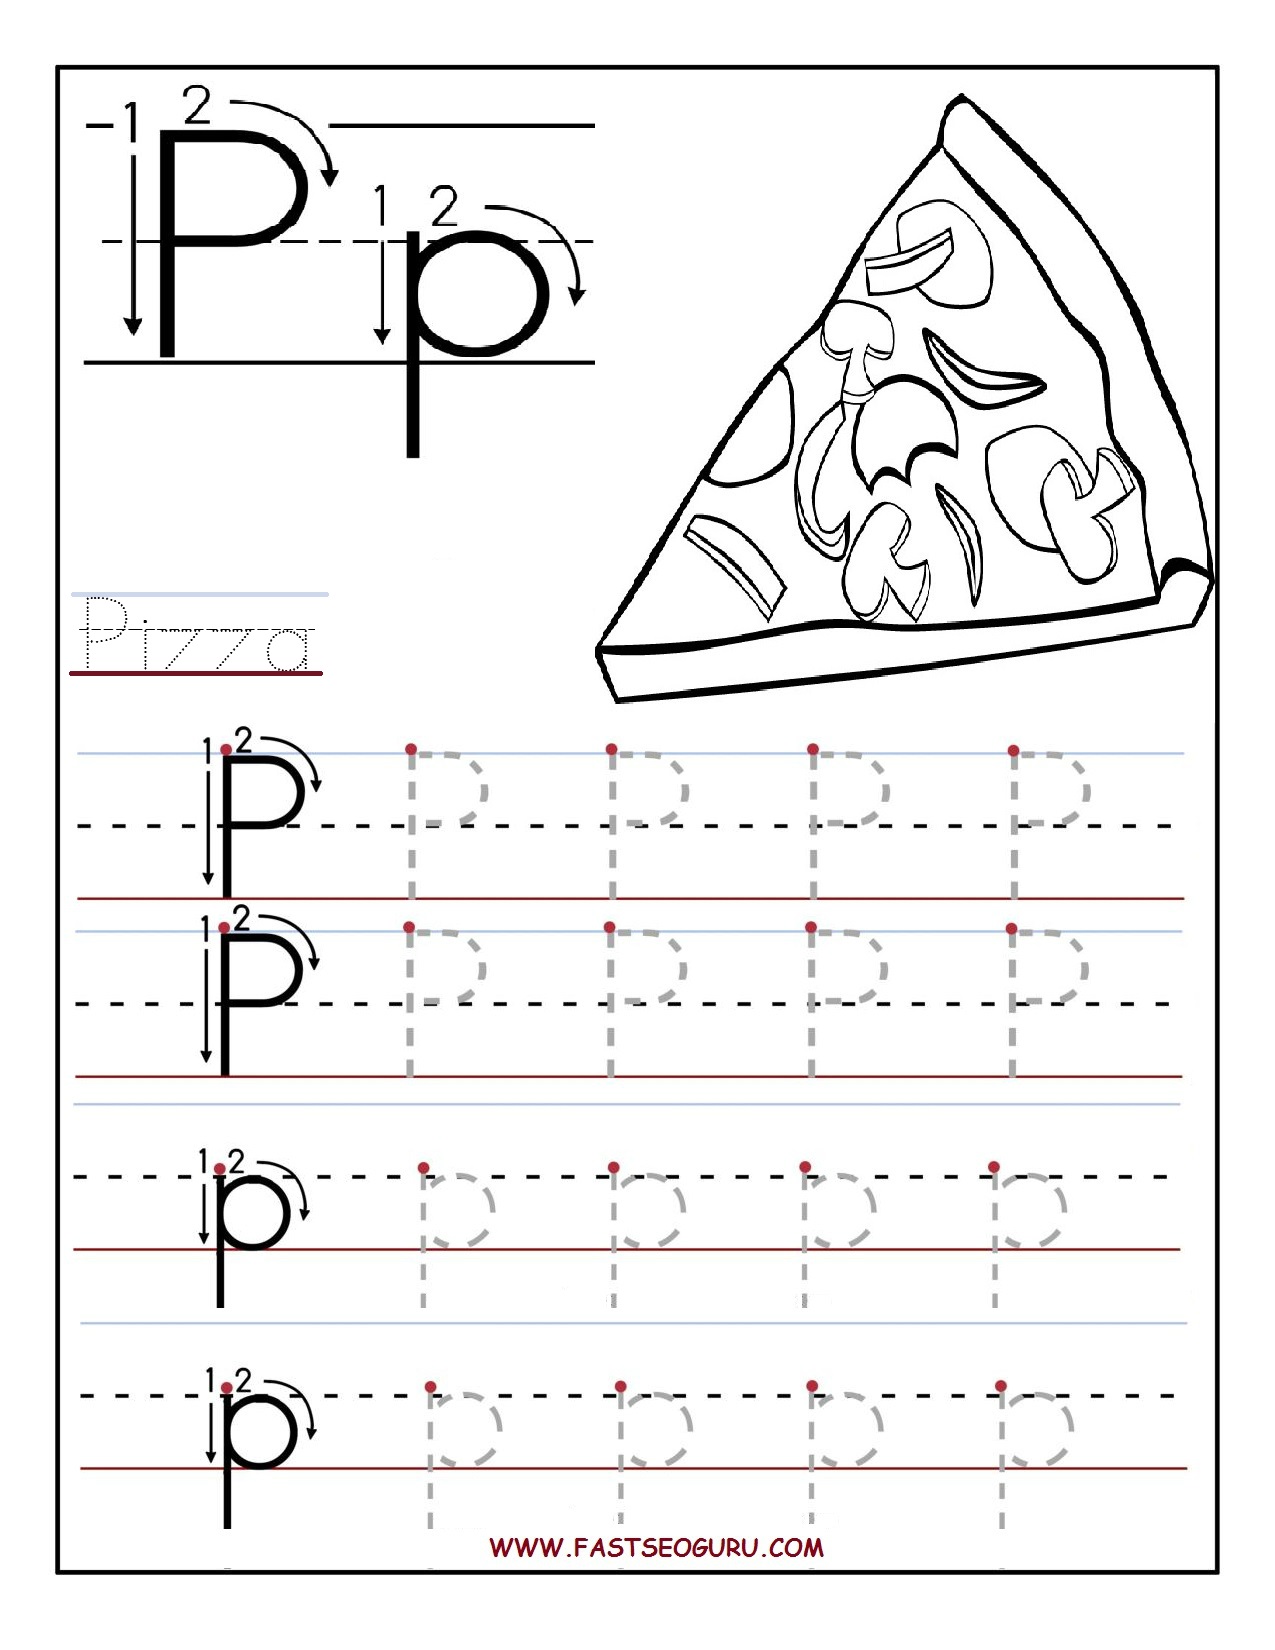 printable-letter-p-tracing-worksheets-for-preschool-jpg-1-275-1-650